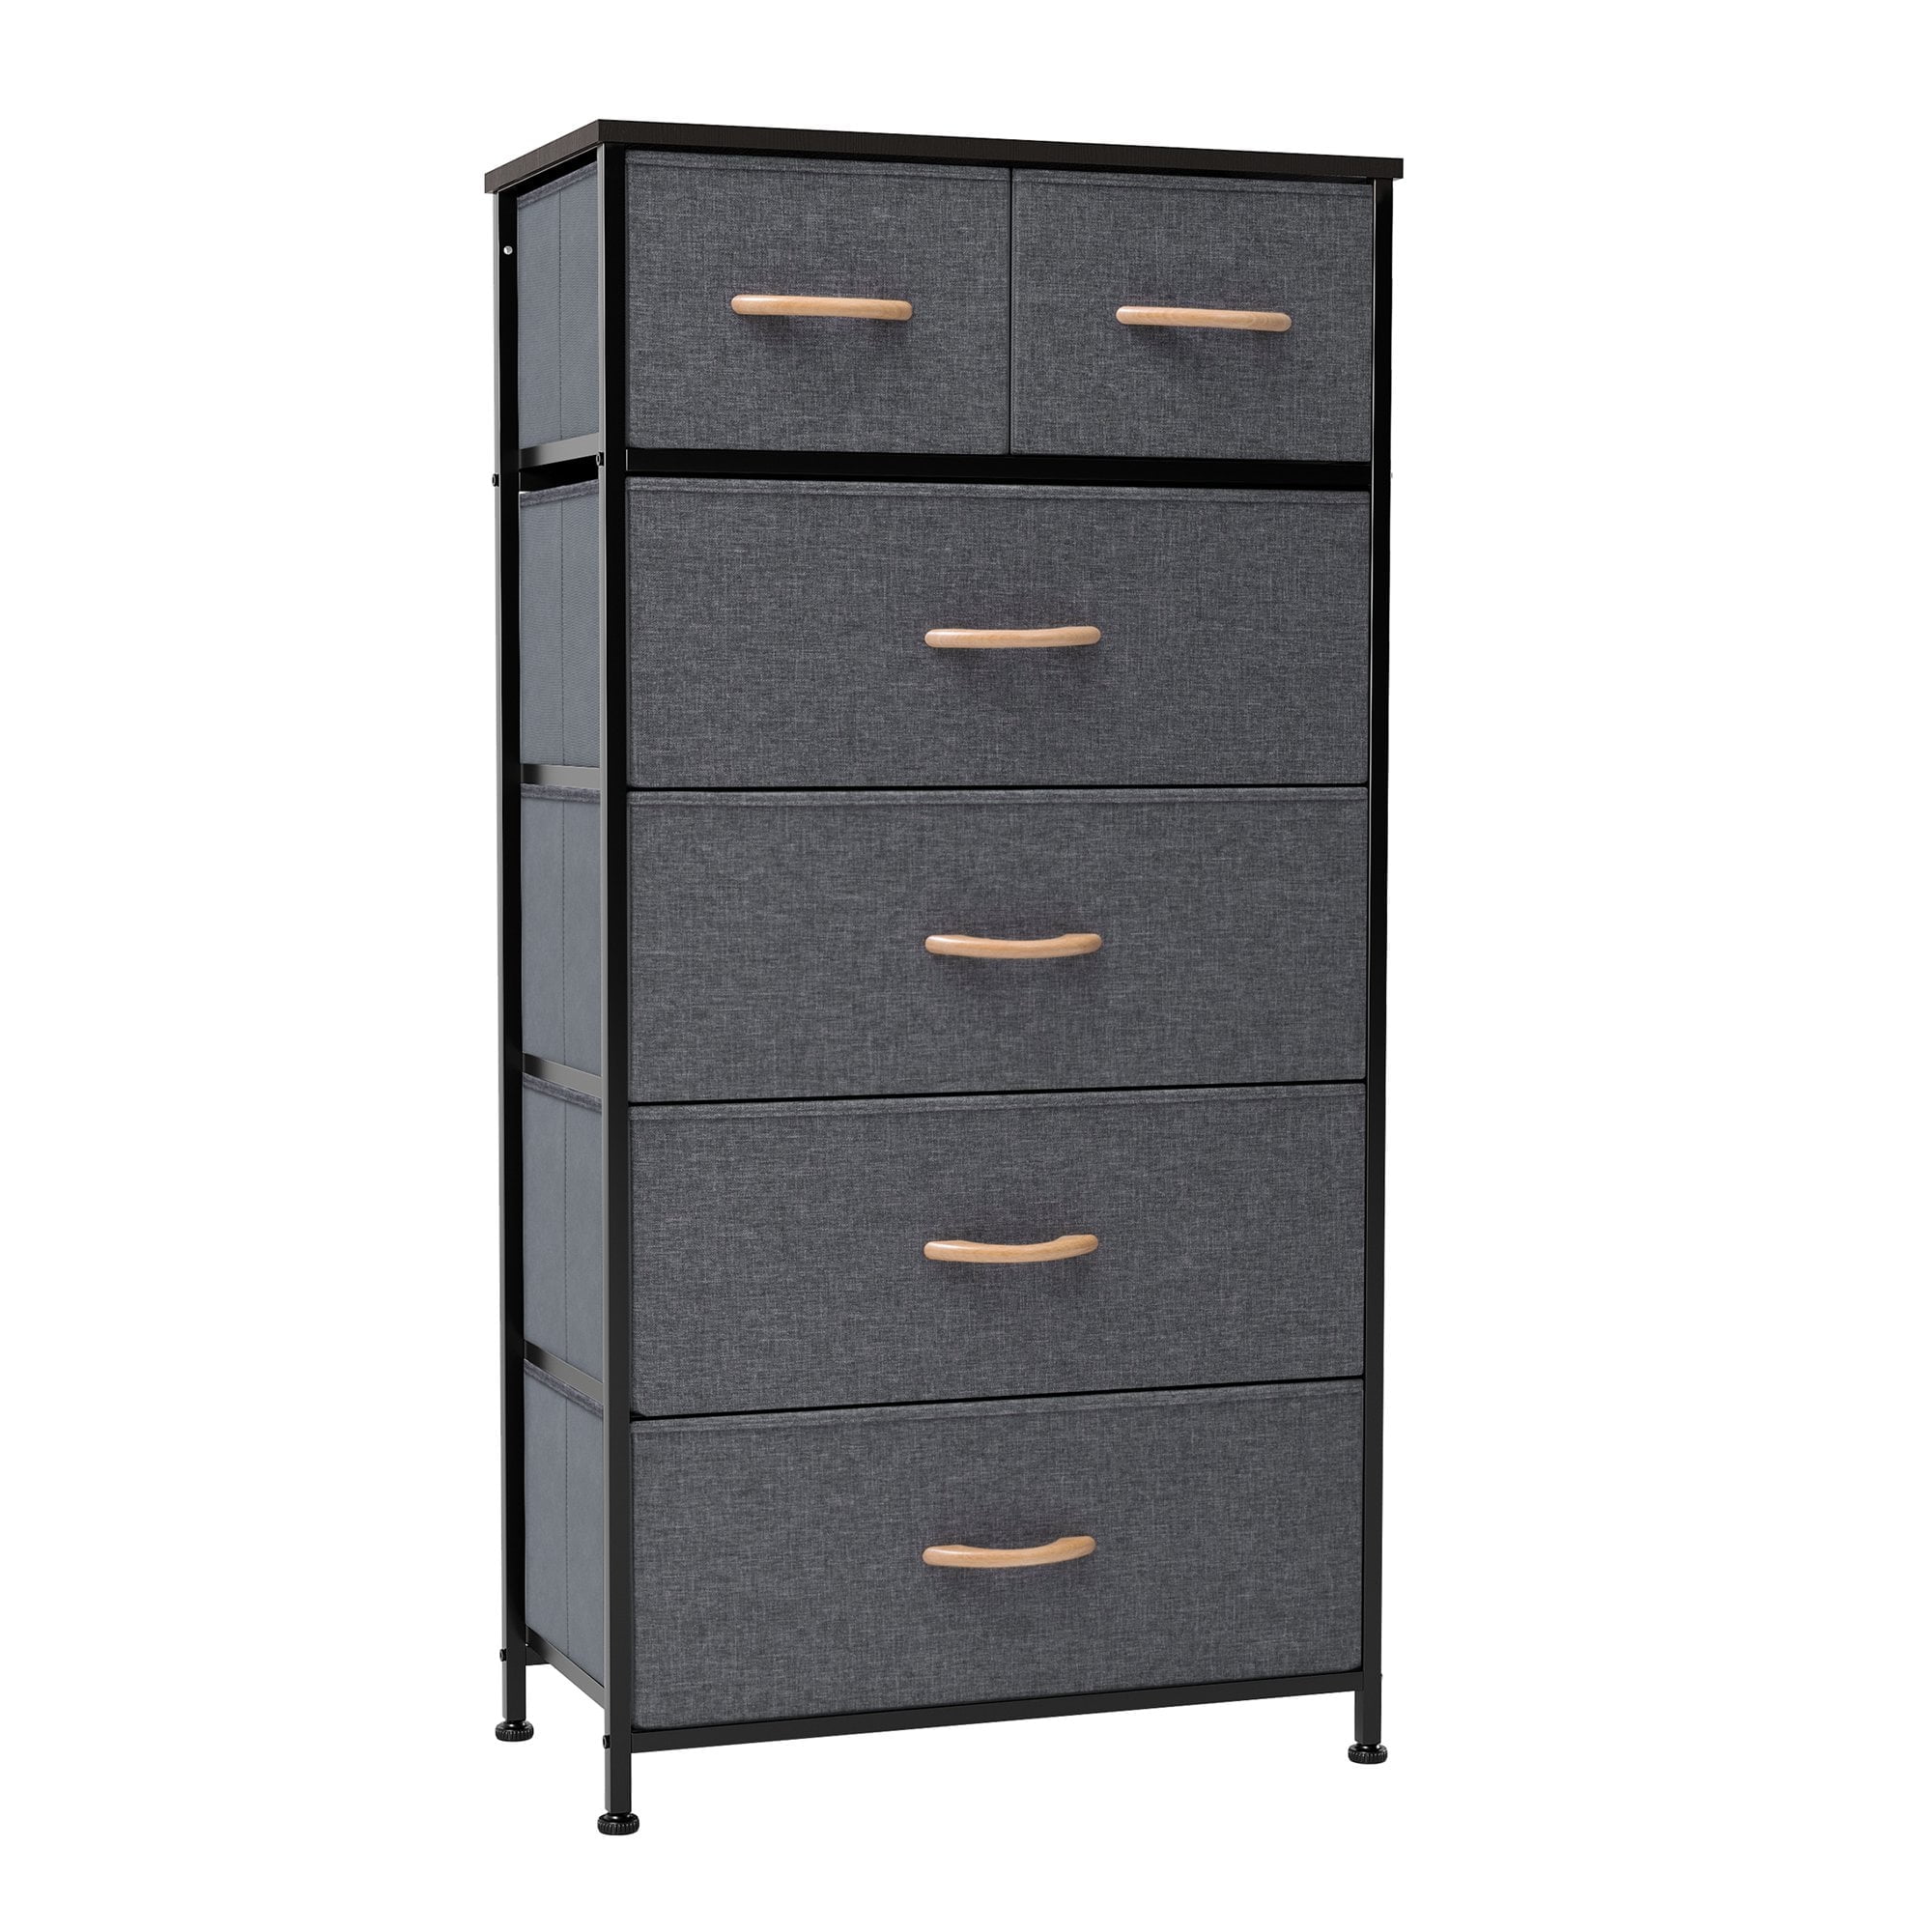 Segmart White 4 Drawer Dresser for Small Space, Wood Storage